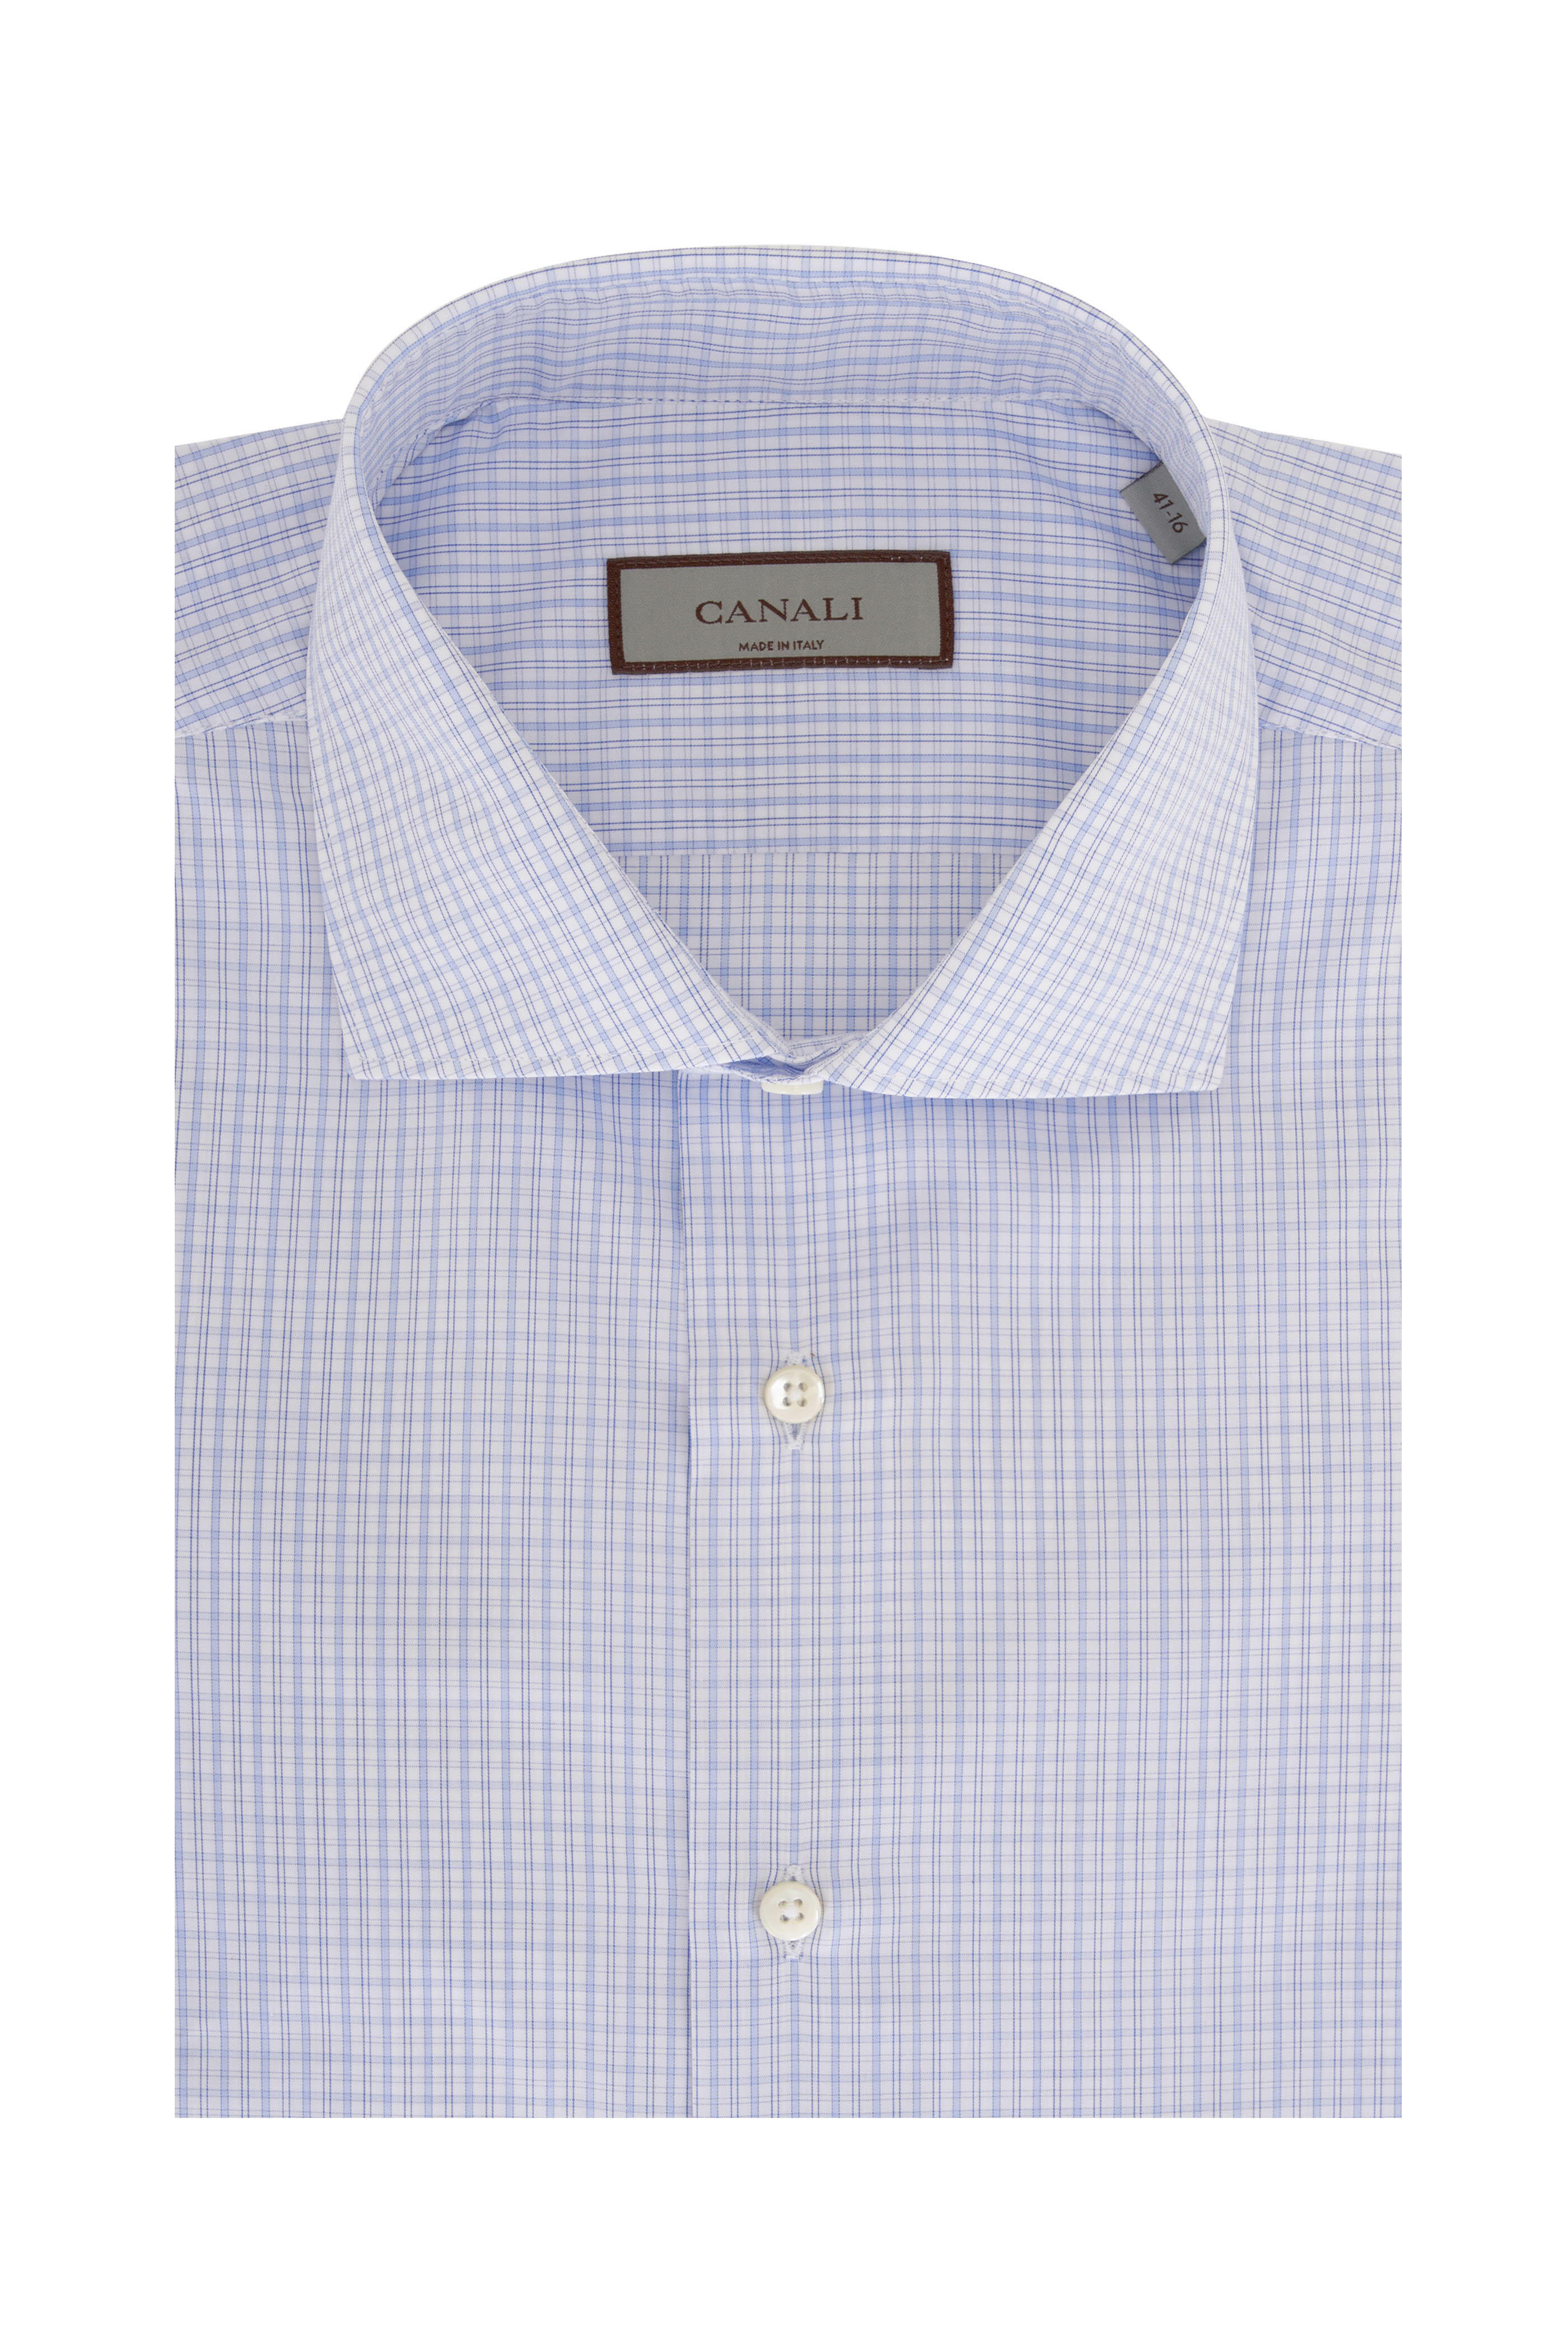 Canali - Blue Check Cotton Dress Shirt | Mitchell Stores